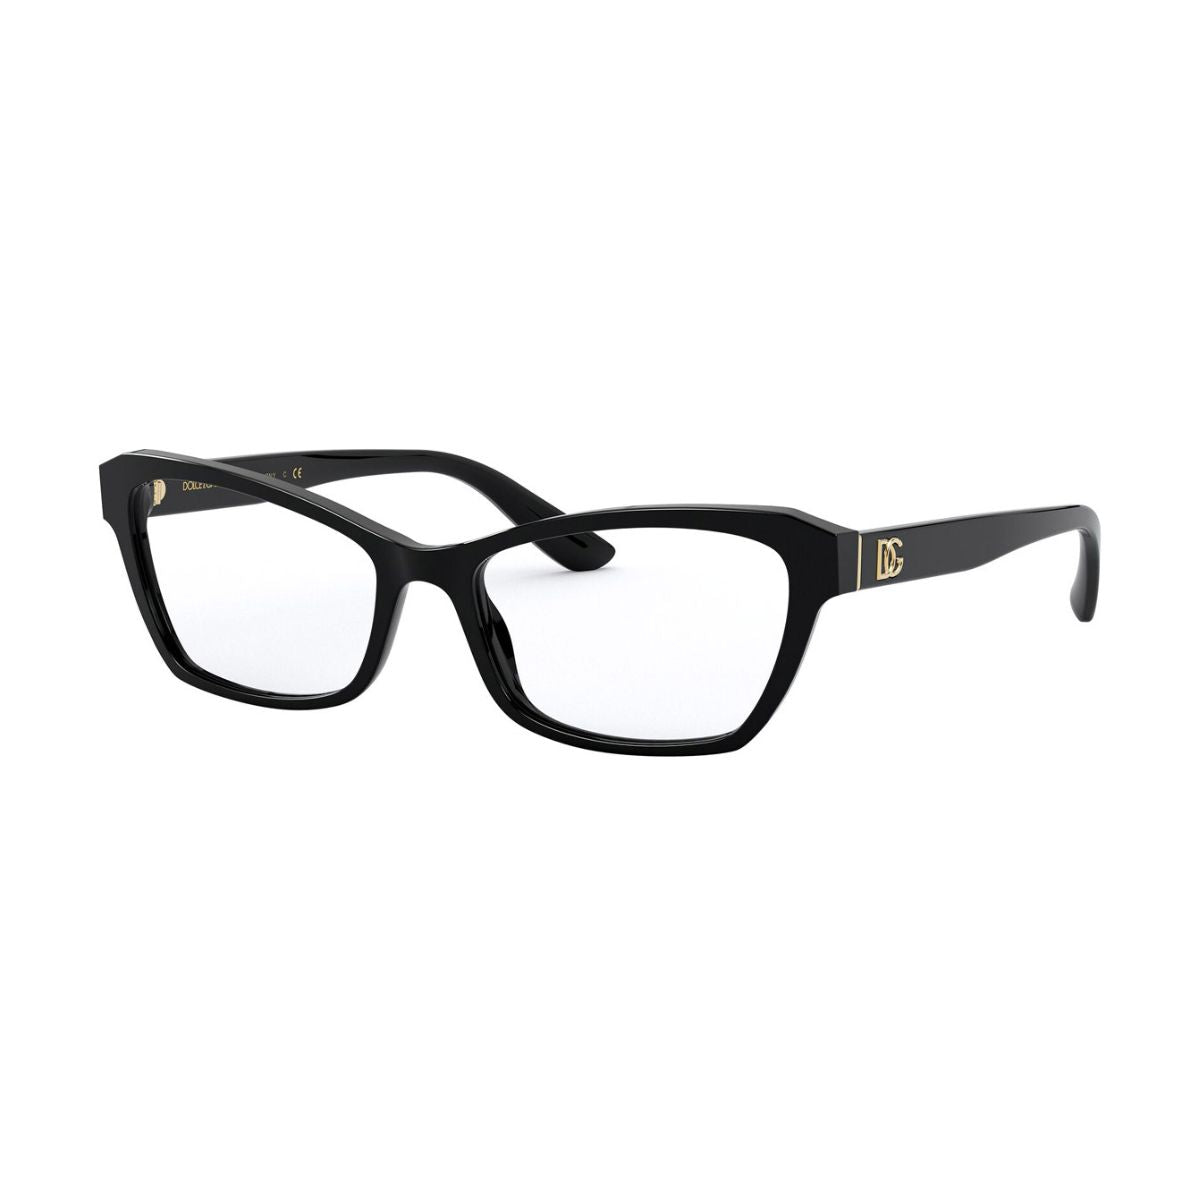 "best Dolce&Gabbana 3328 501 optical eyewear frames for women's at optorium"